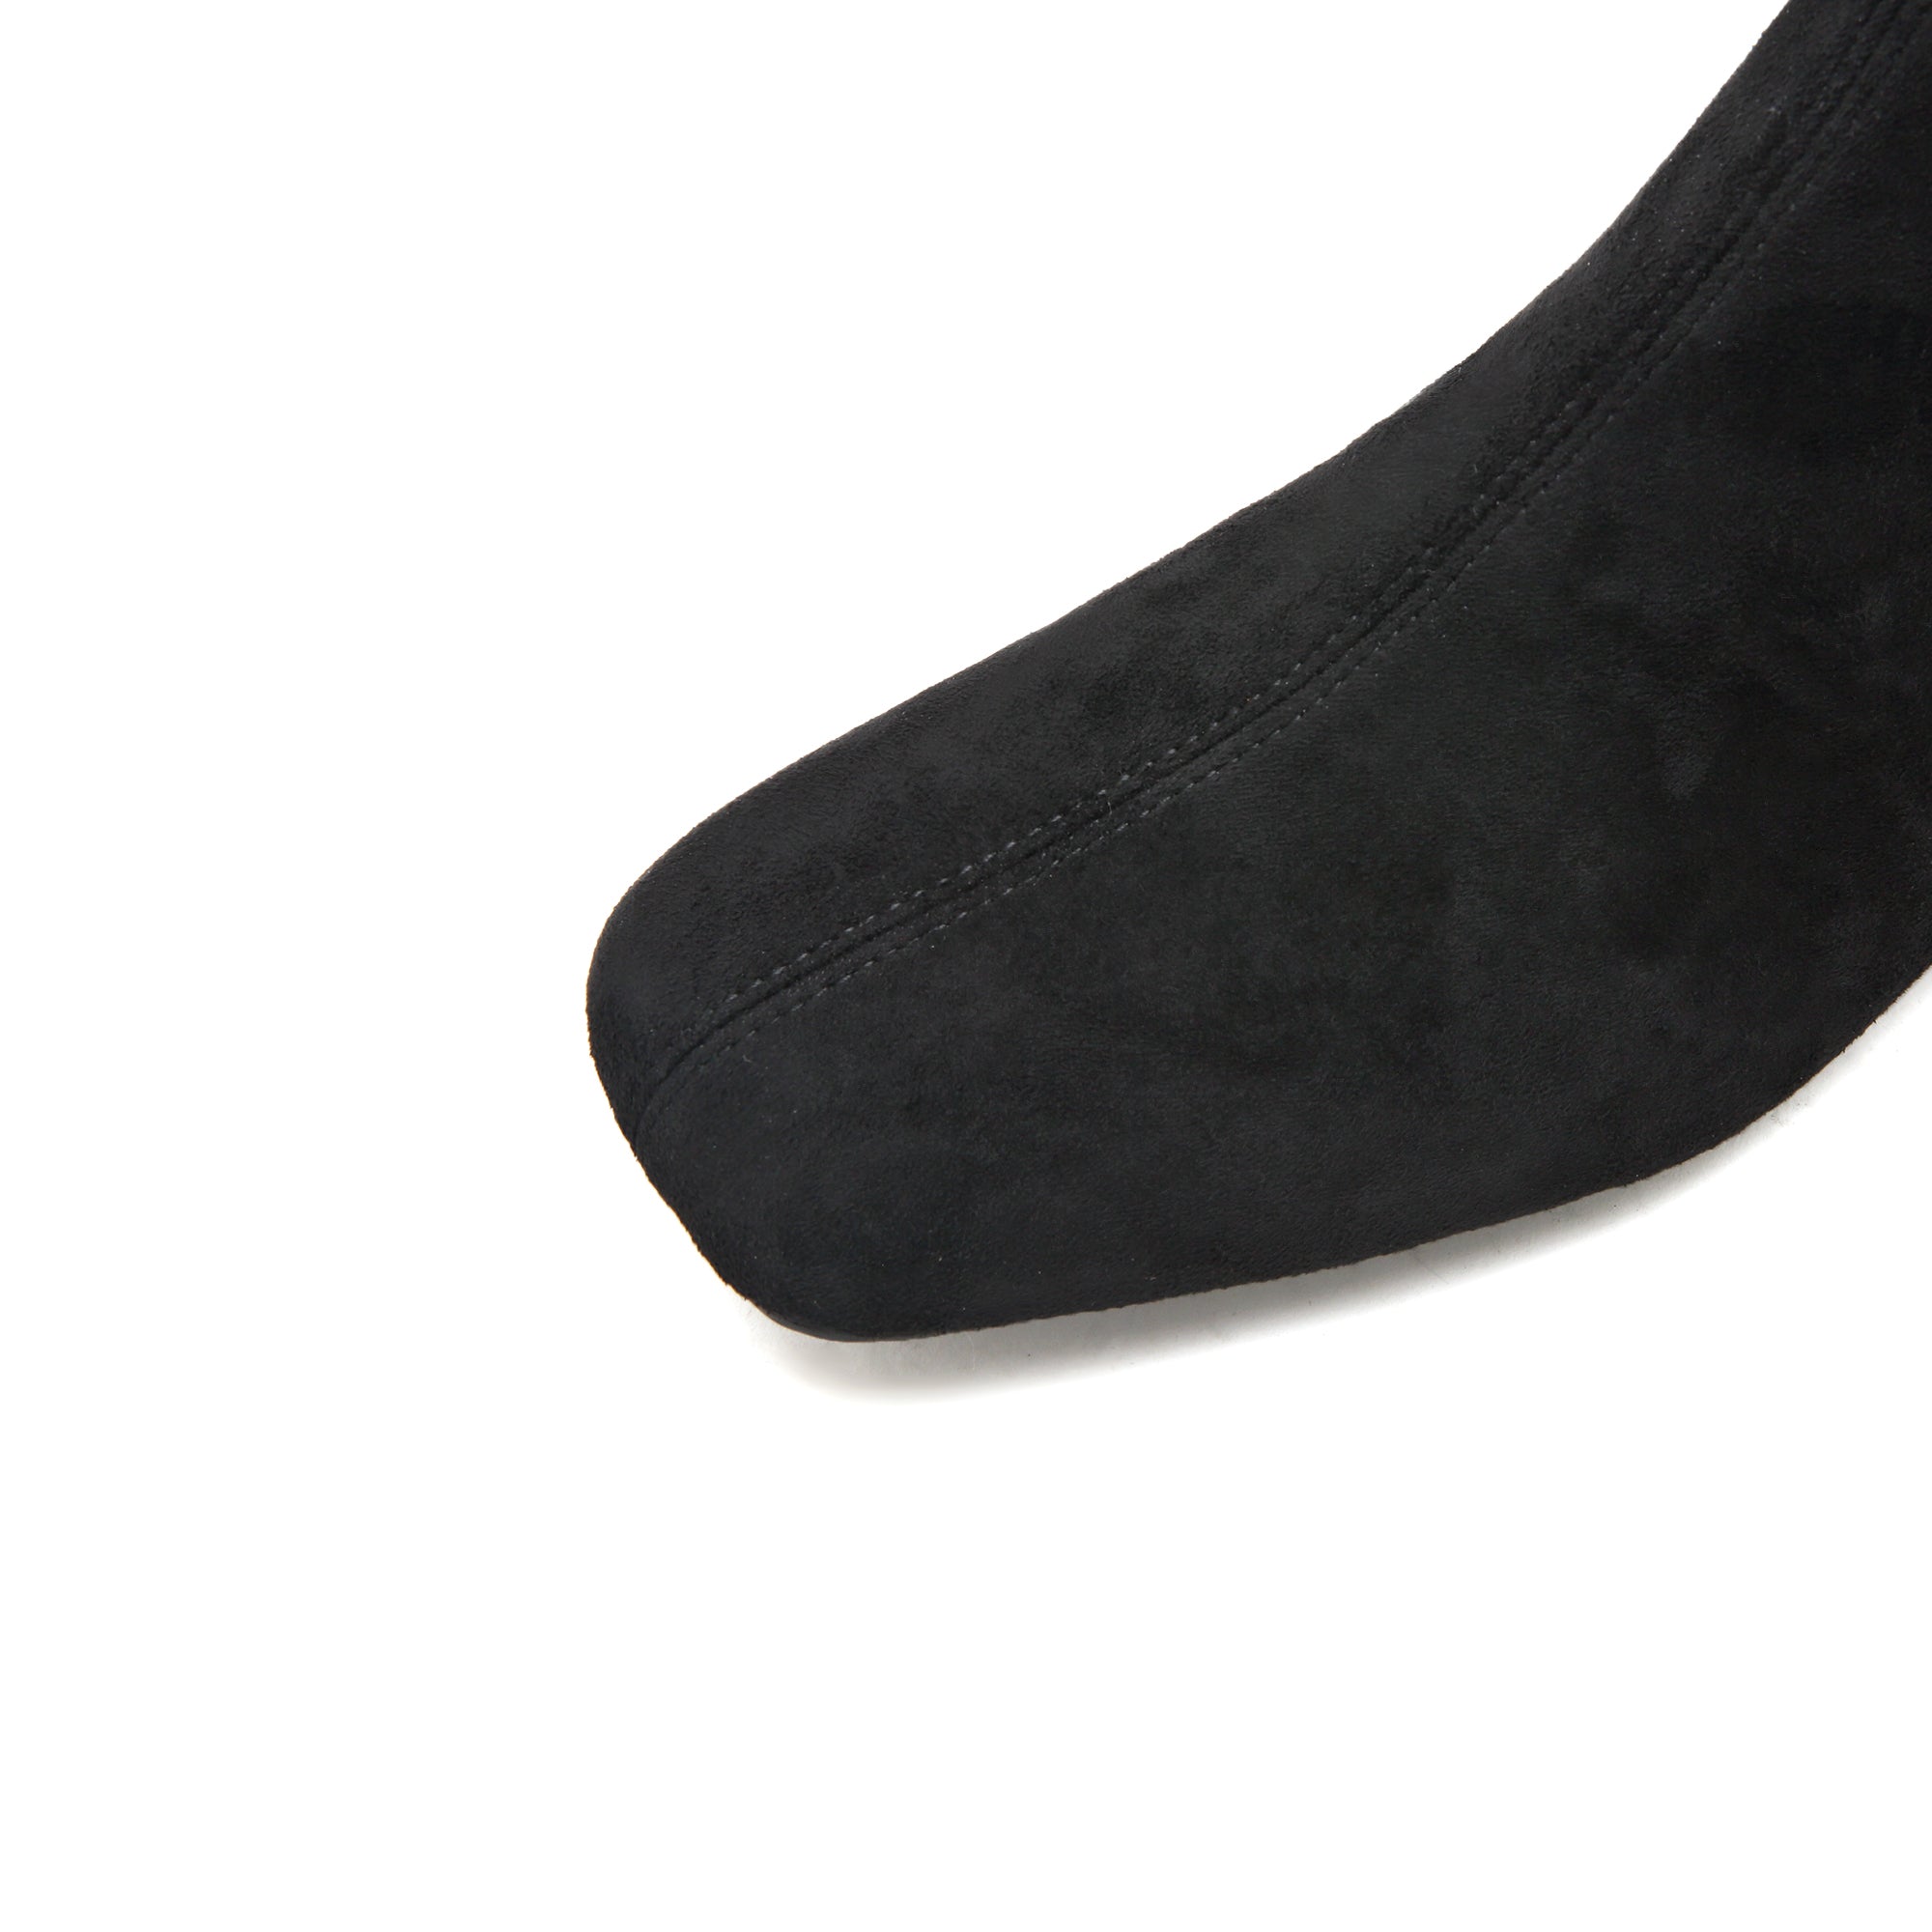 Black Square Toe Heeled Long Sock Boots